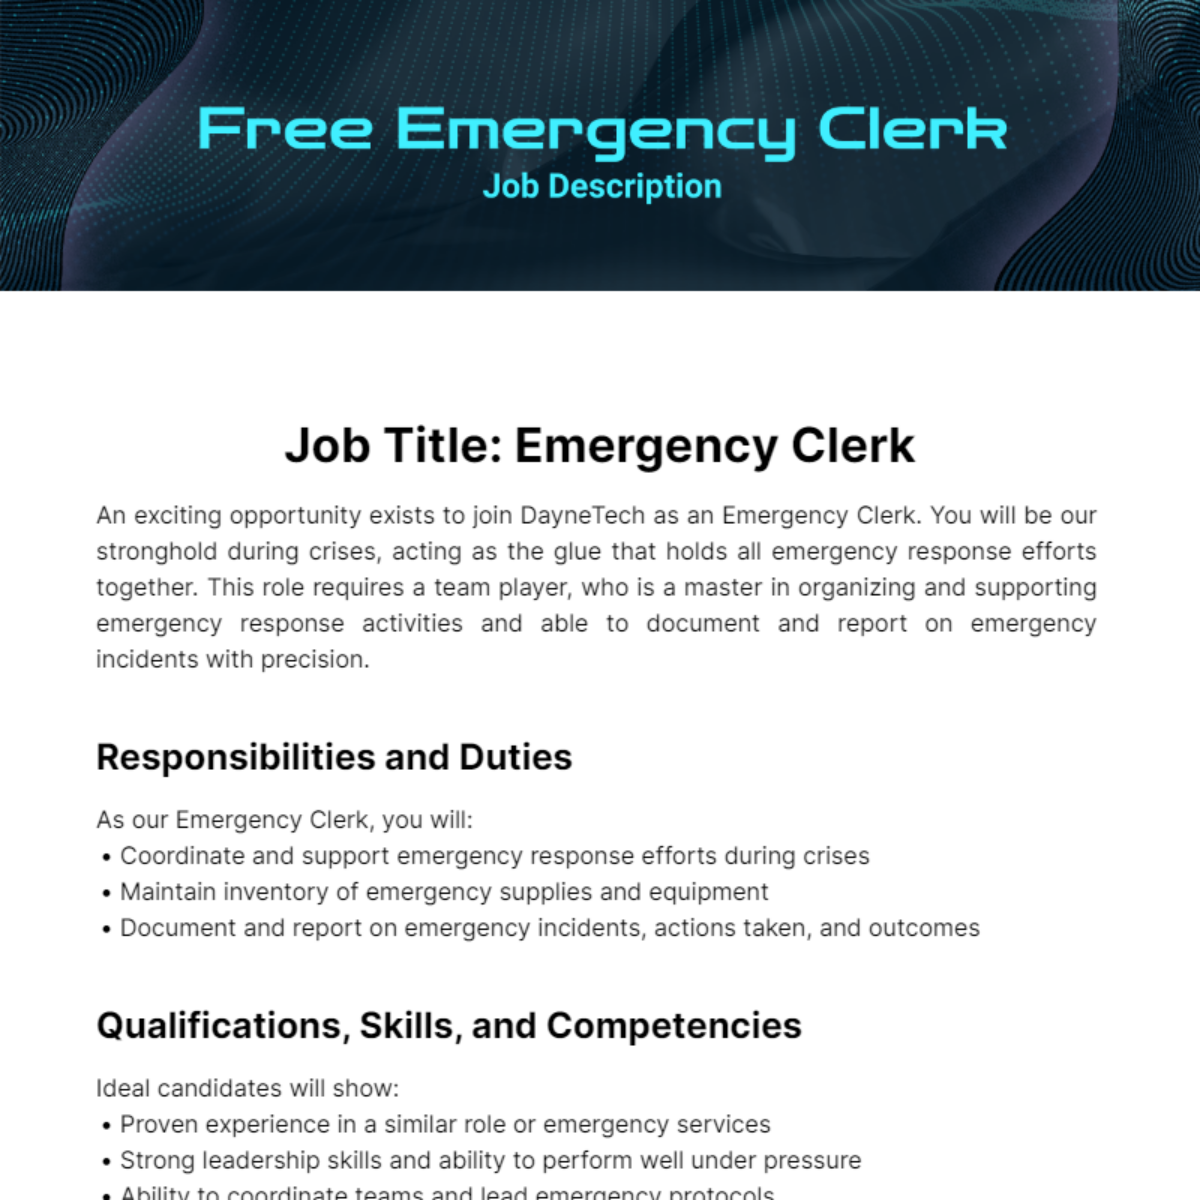 Free Emergency Clerk Job Description Template